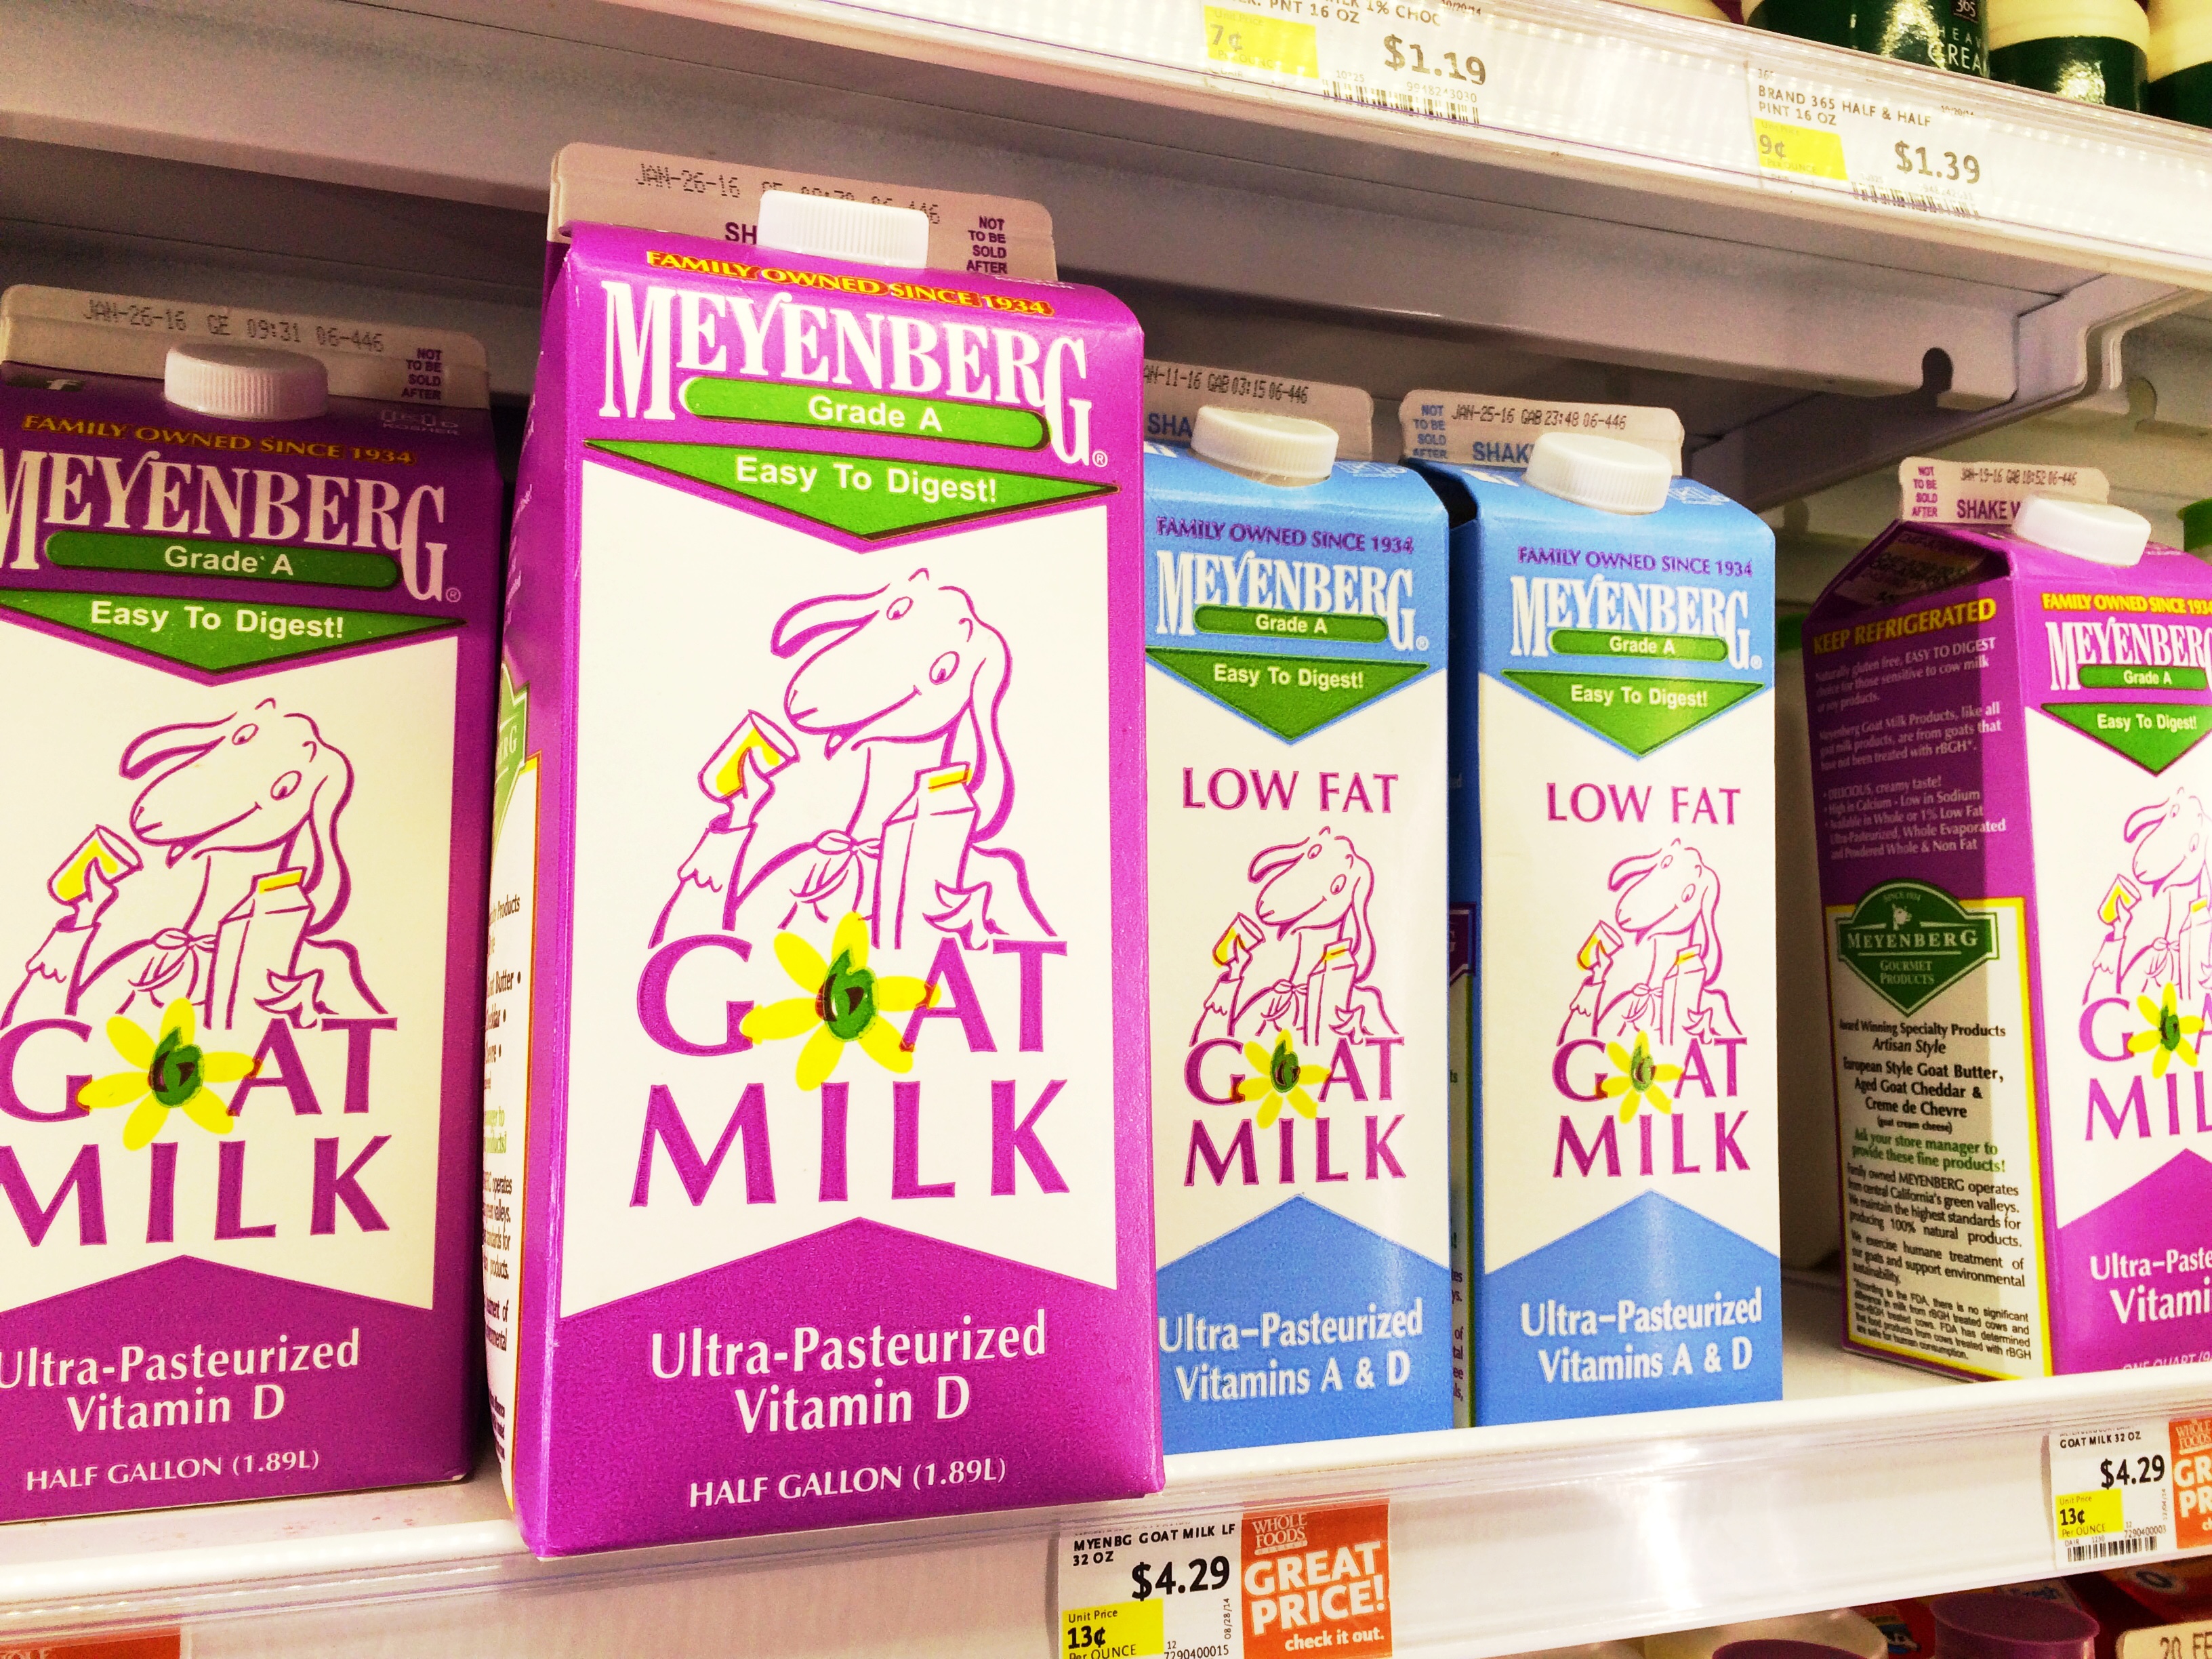 Mooove over cows: Goat milk sales climb in U.S. dairy market